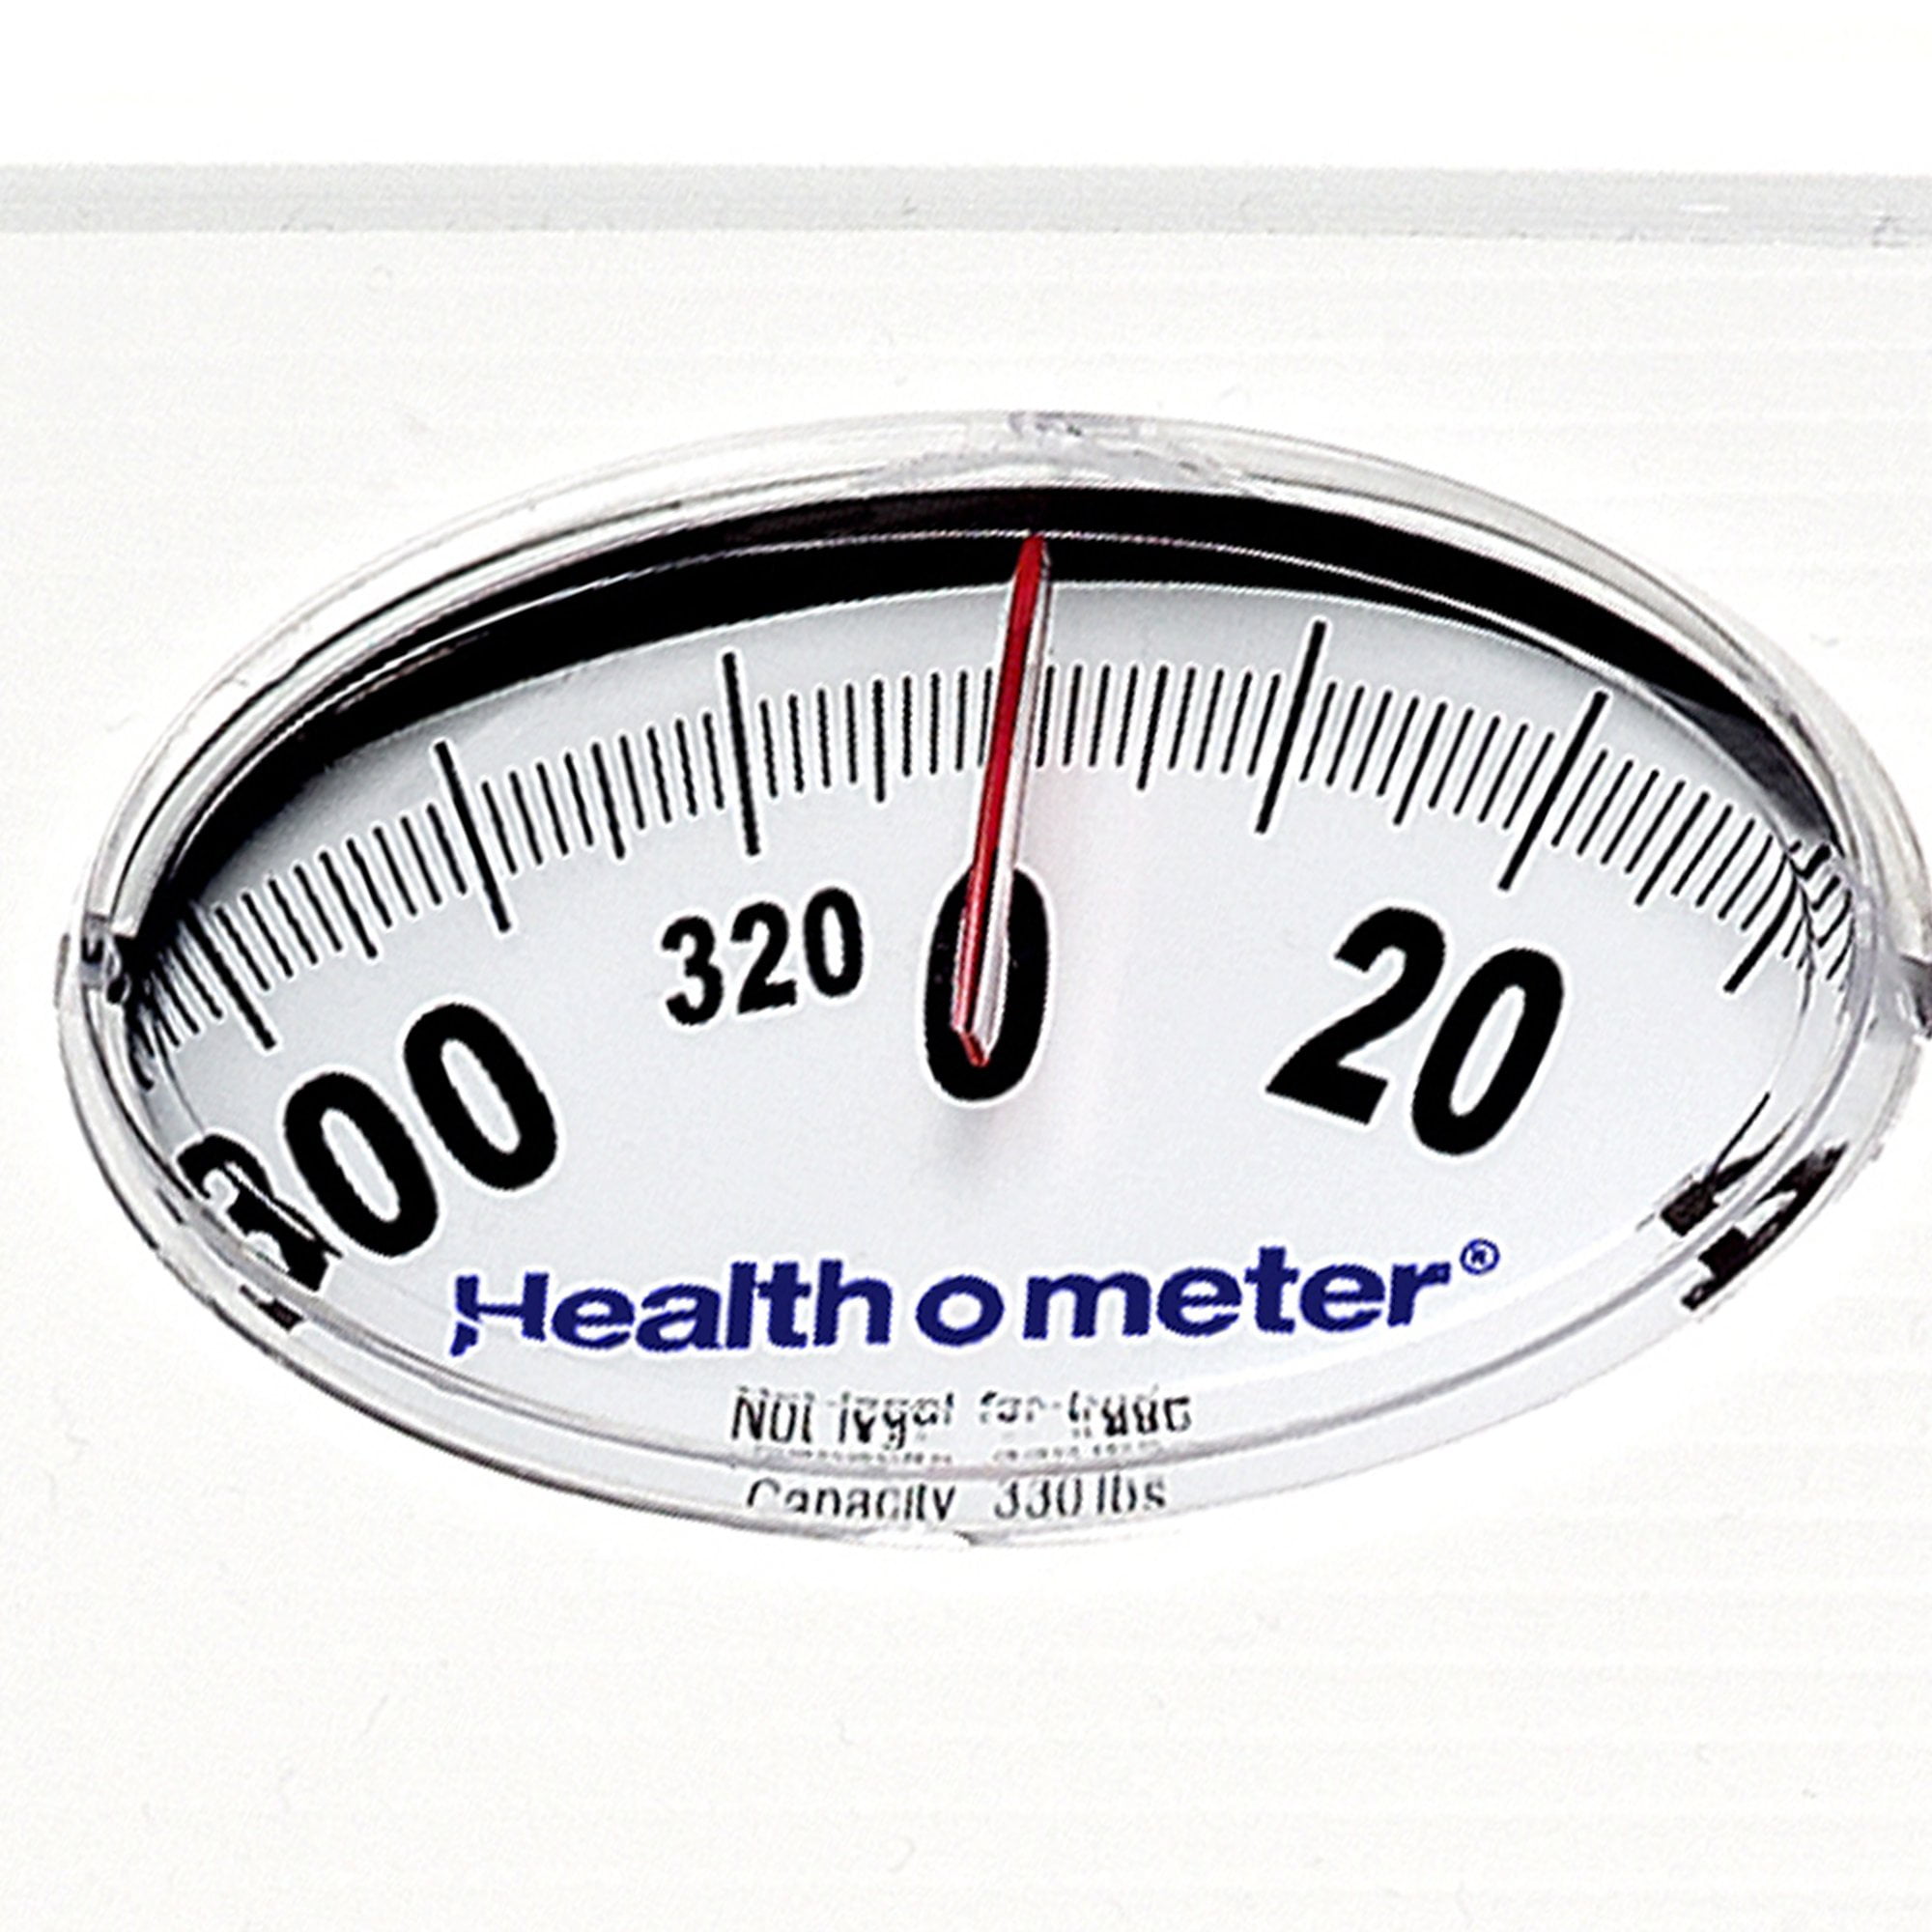 Health O Meter Floor Scale 330